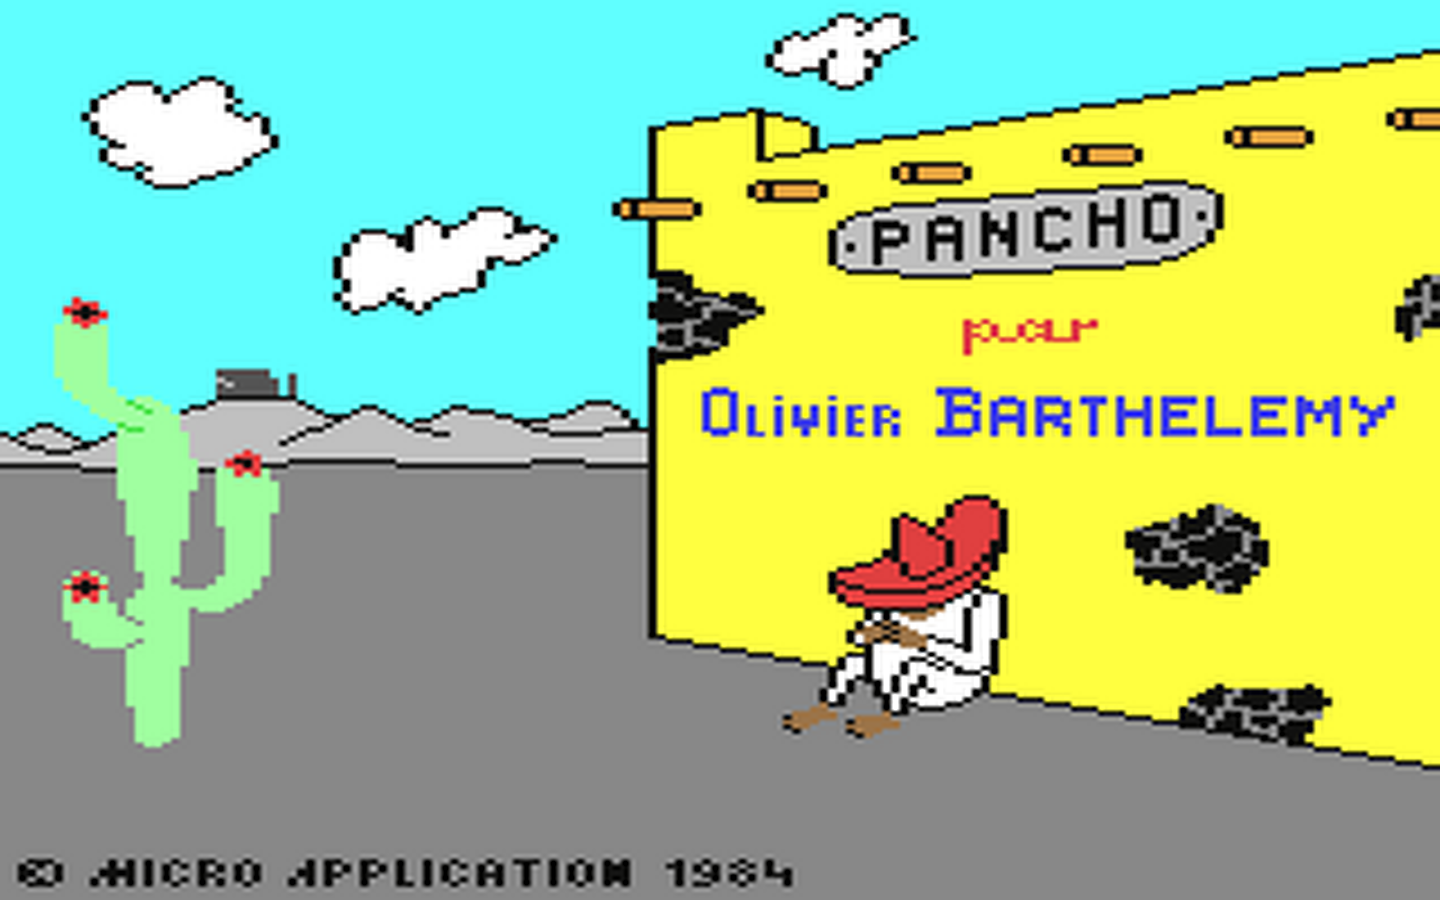 C64 GameBase Pancho Micro_Application 1984